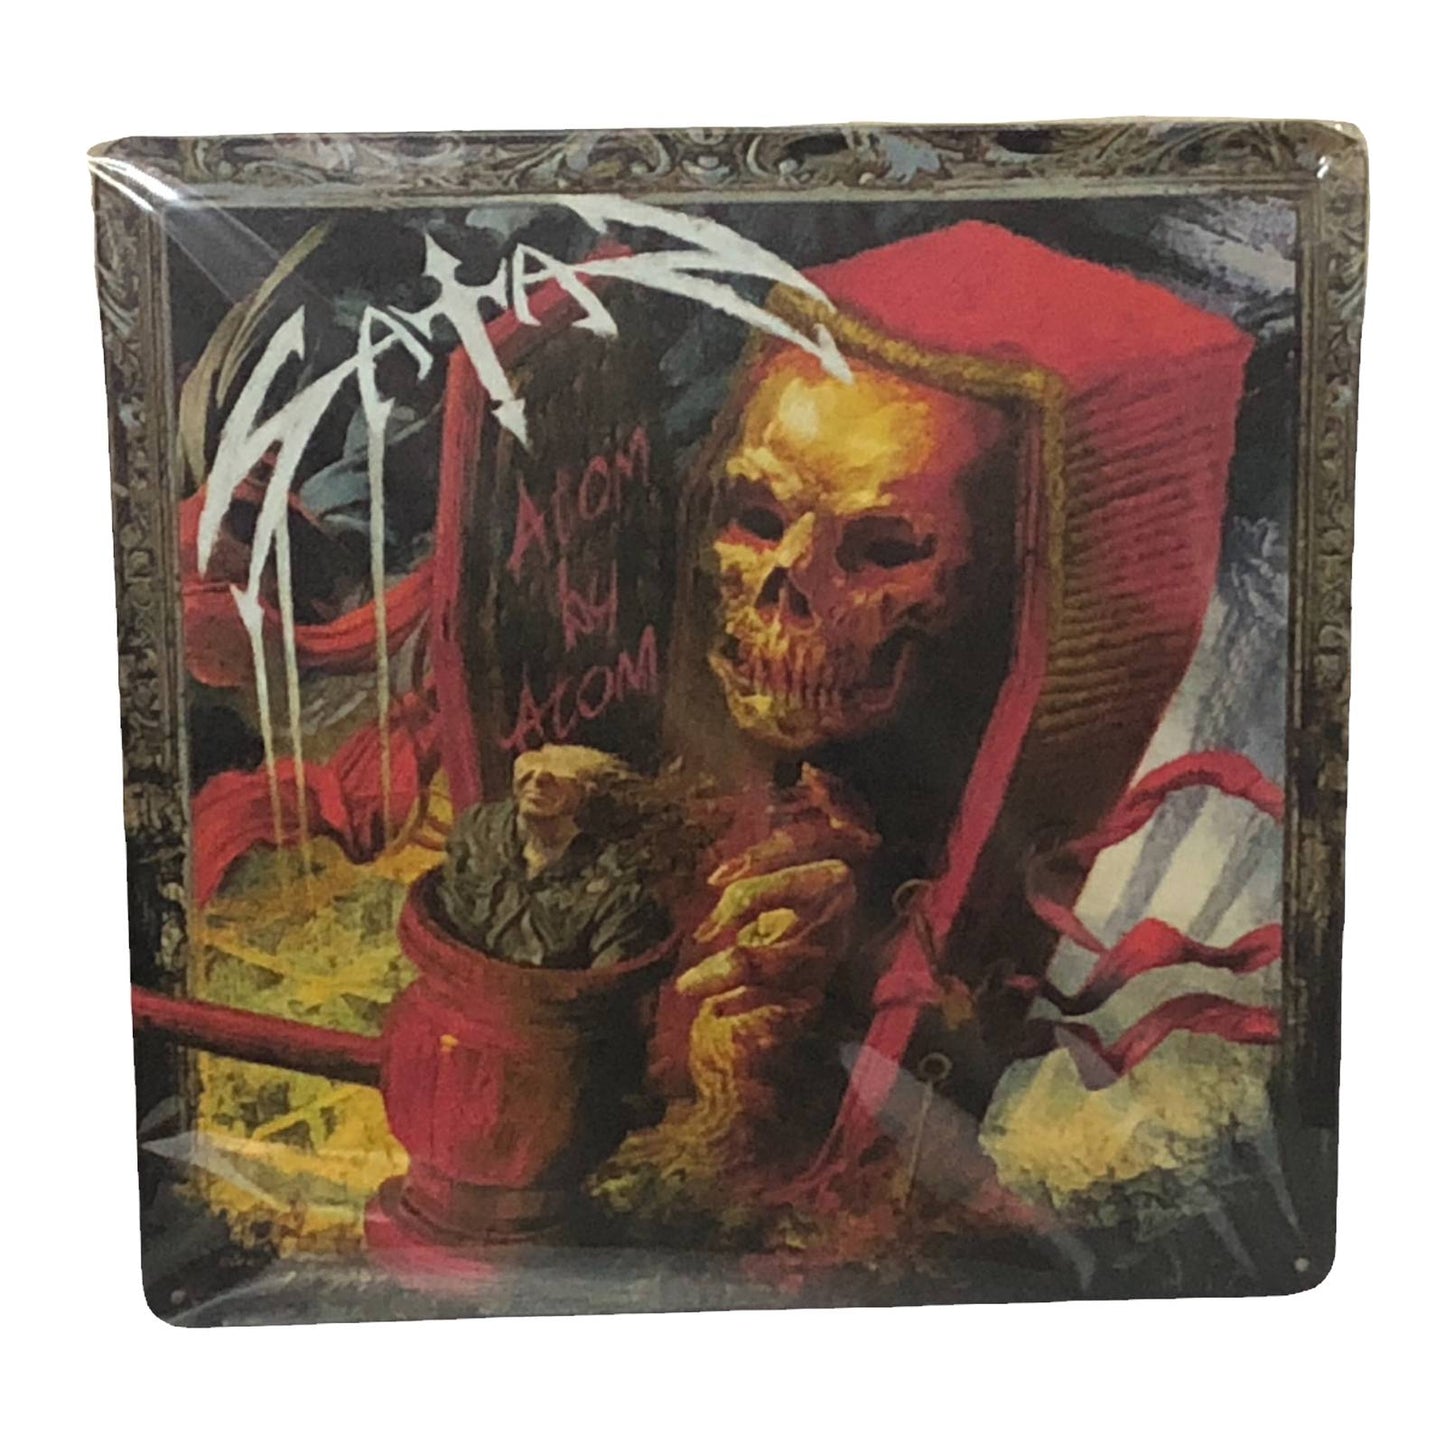 Satan - Atom by Atom Album Cover Metal Print Tin Sign 12"x 12"